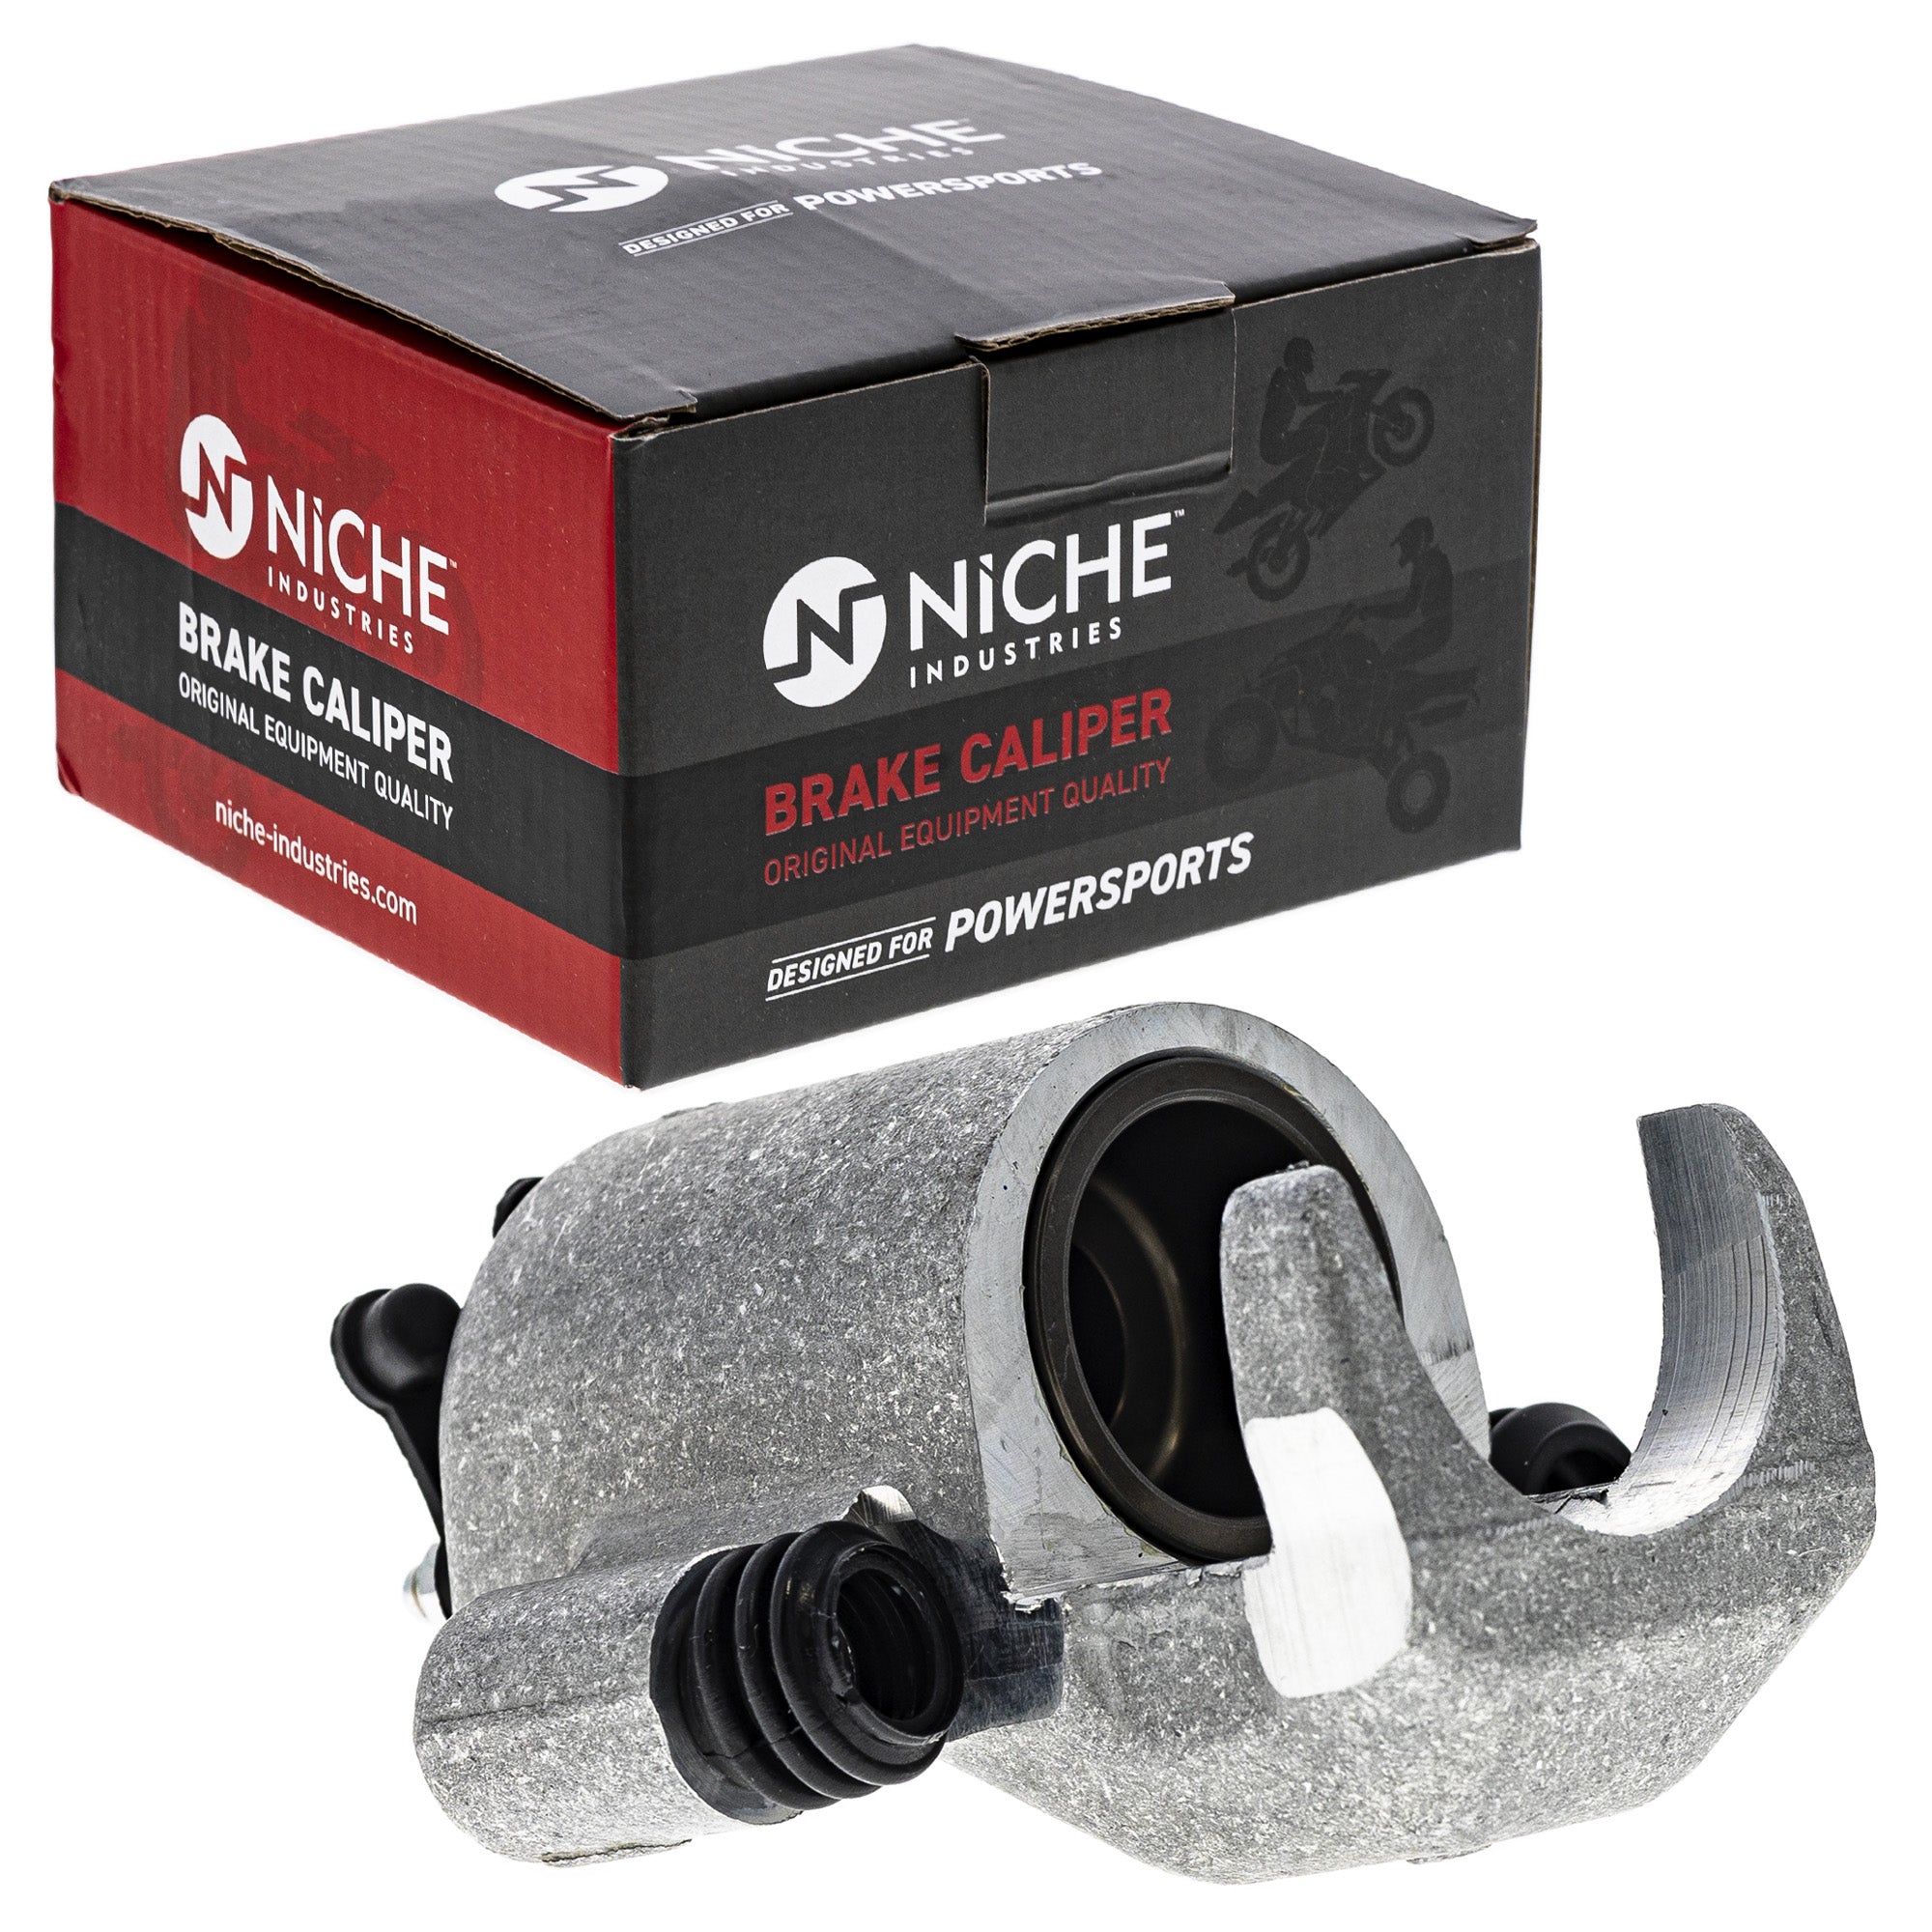 NICHE 519-CCL2245P Brake Caliper Assembly 2-Pack for Polaris